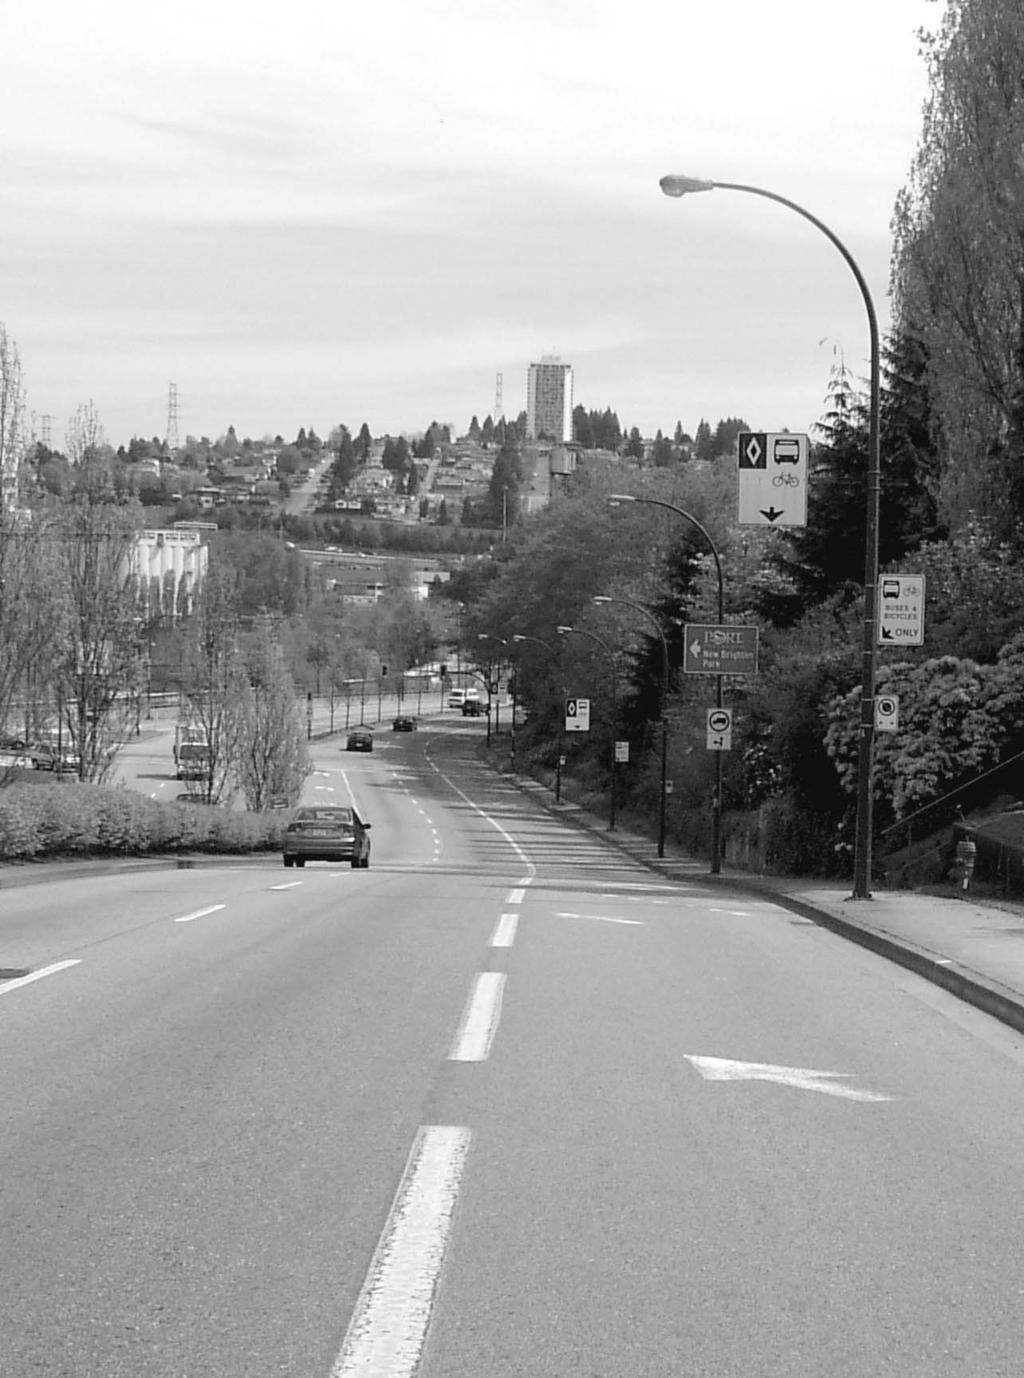 Road Network Vancouver Transportation lan